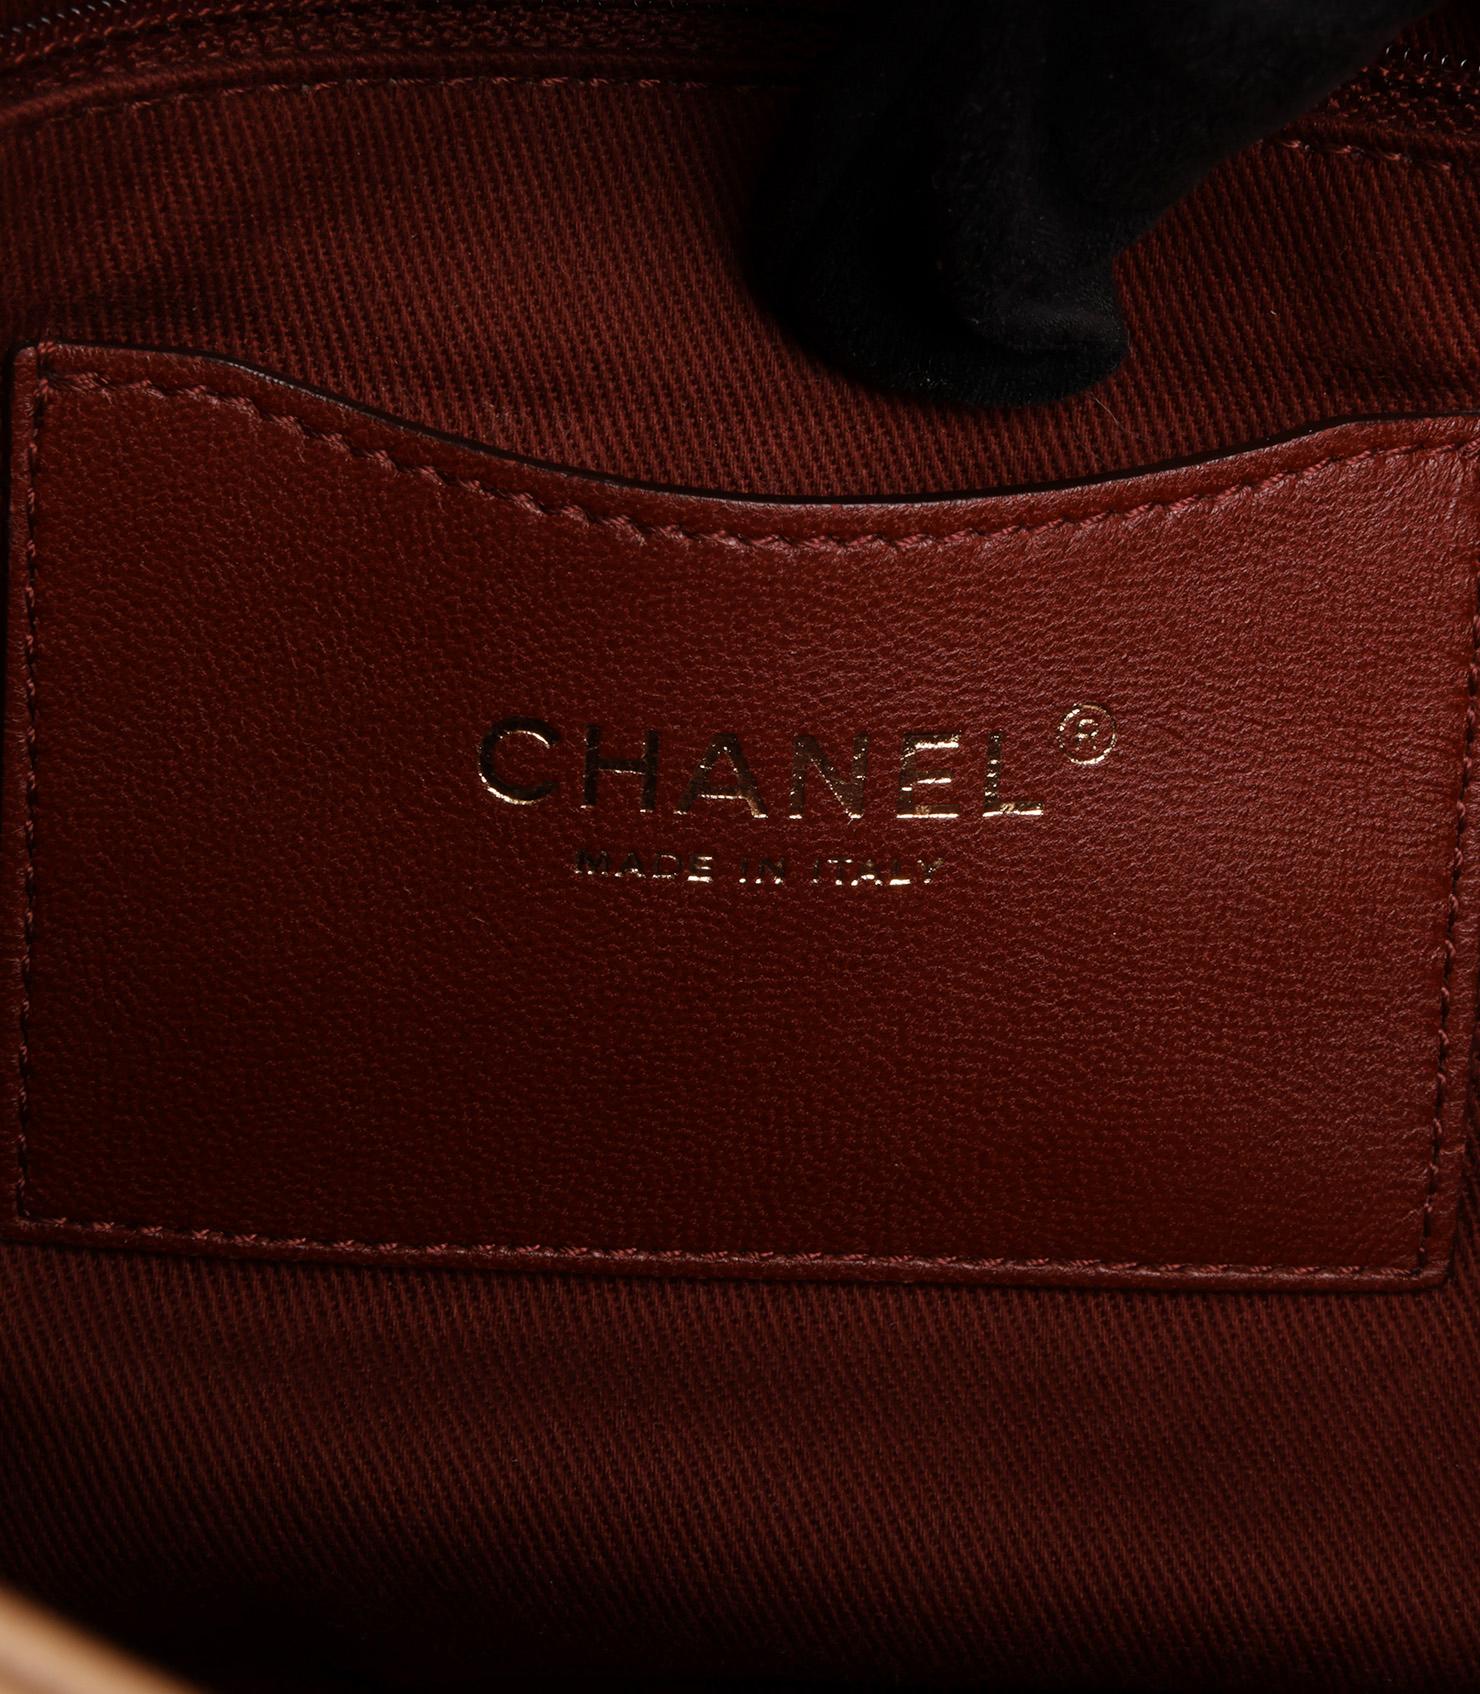 Chanel - Grand sac bowling Just Mademoiselle en cuir d'agneau matelassé beige 6